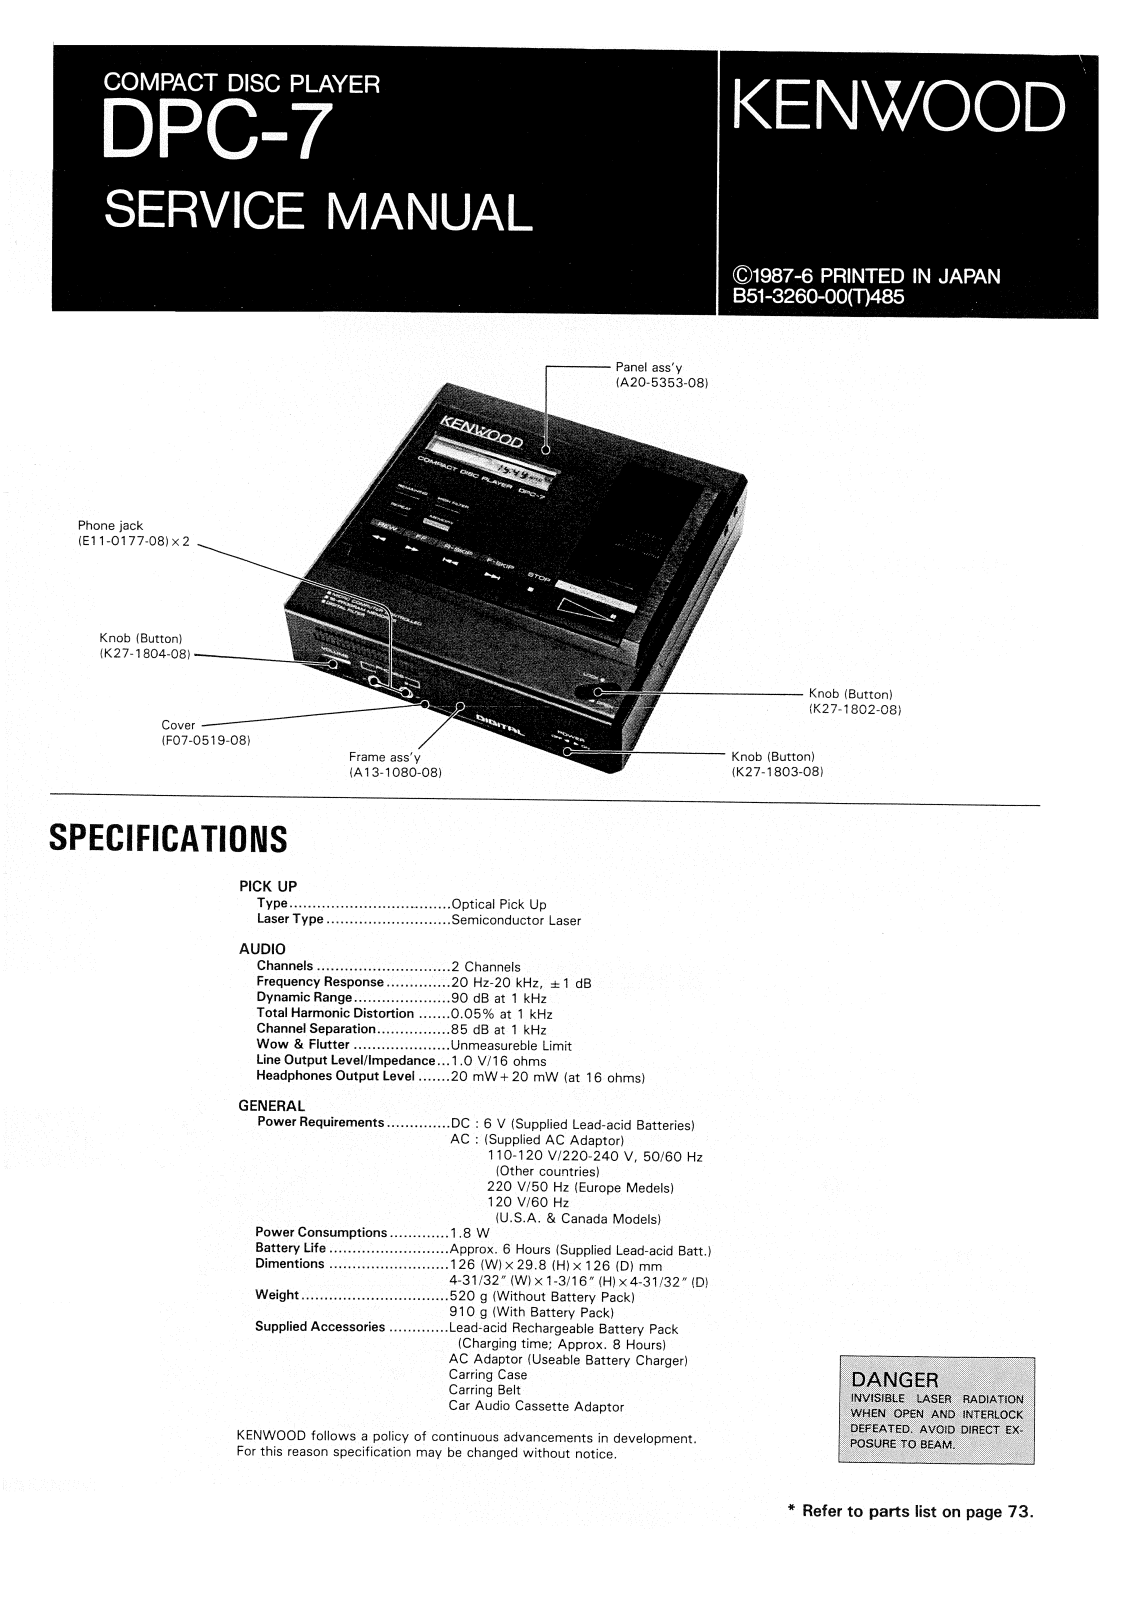 Kenwood dpc-7 service manual